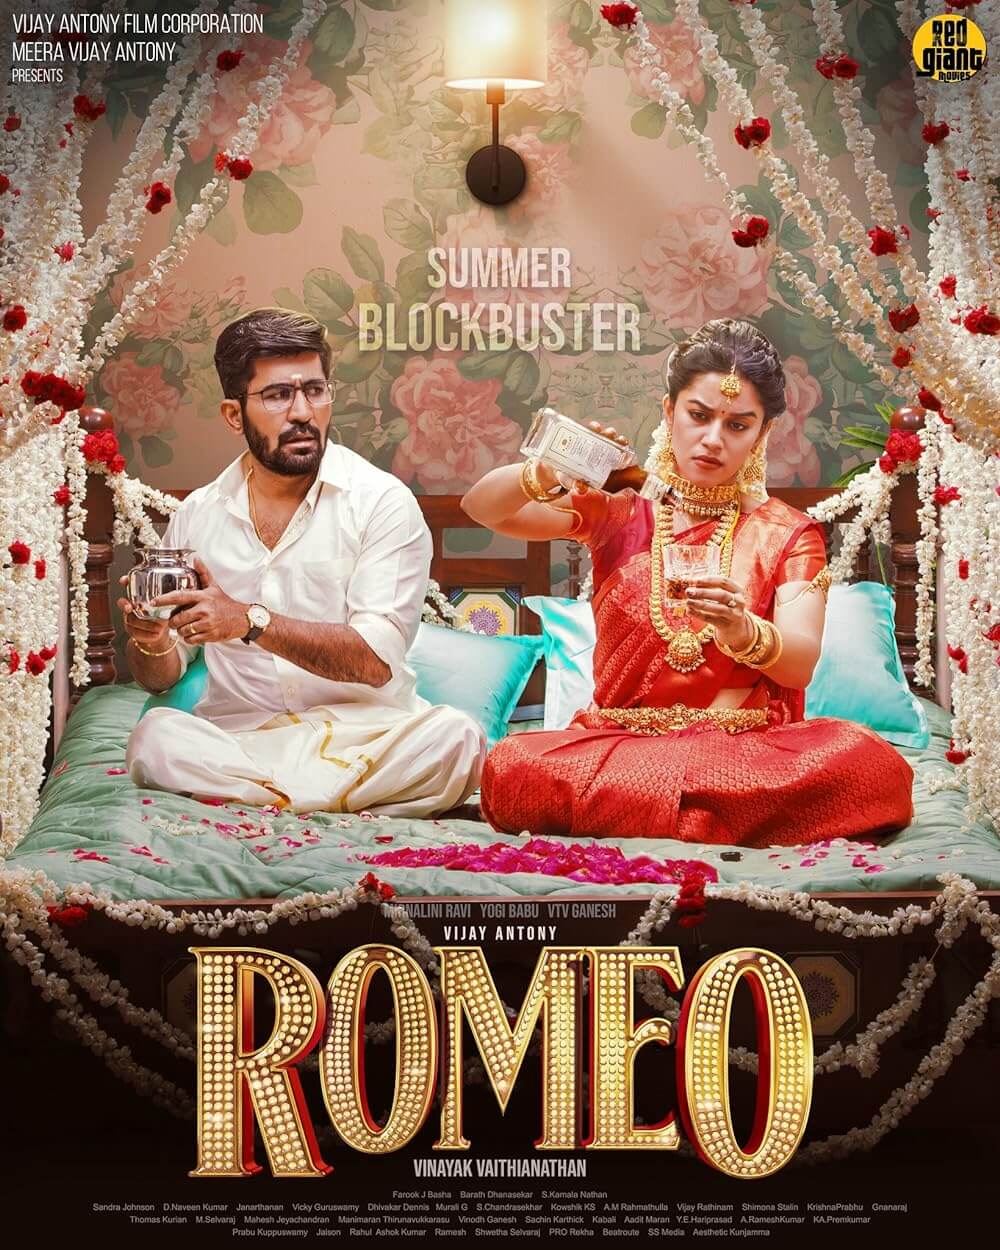 Romeo Movie Poster